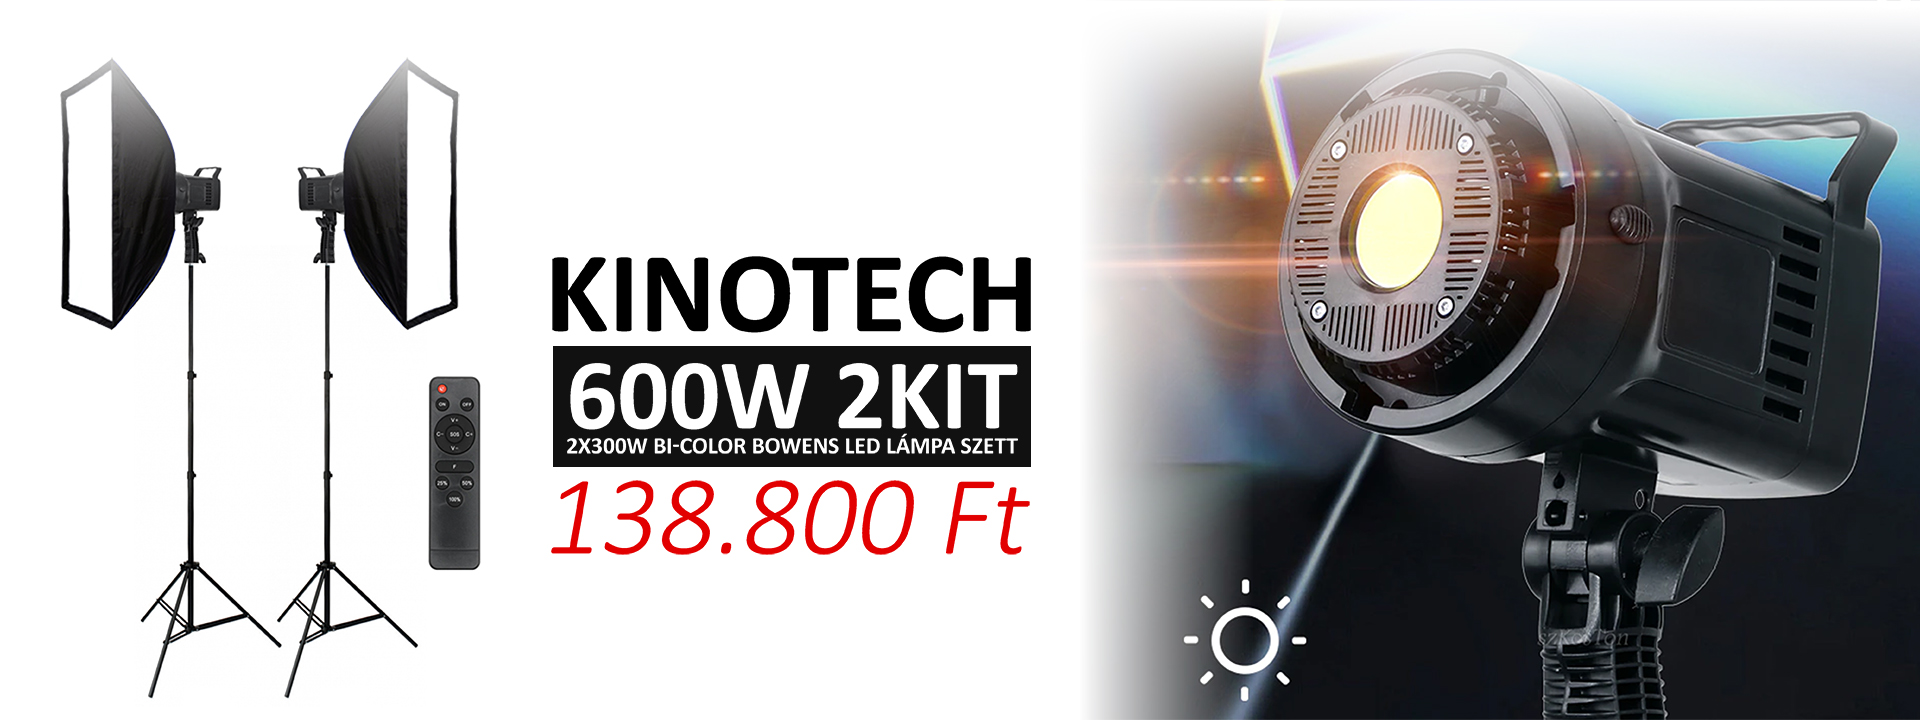 Kinotech 600W 2kit